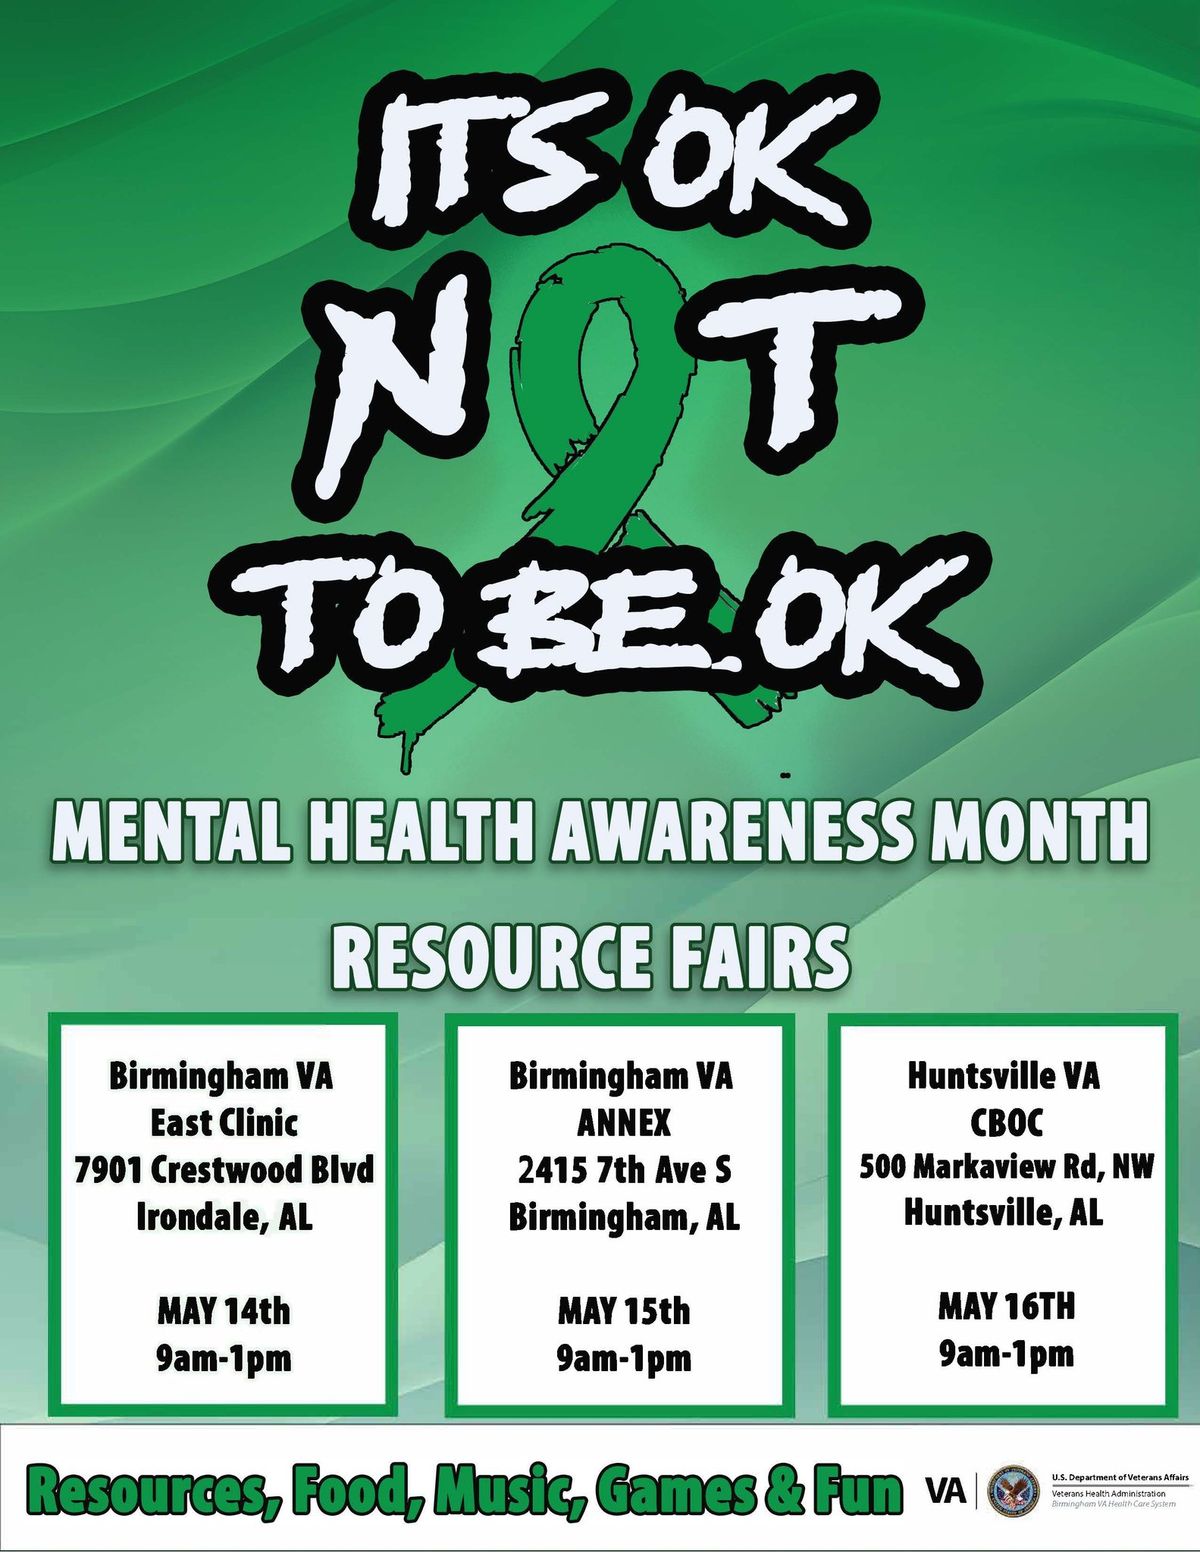 Birmingham VA Clinic Mental Health Awareness Month Resource Fair